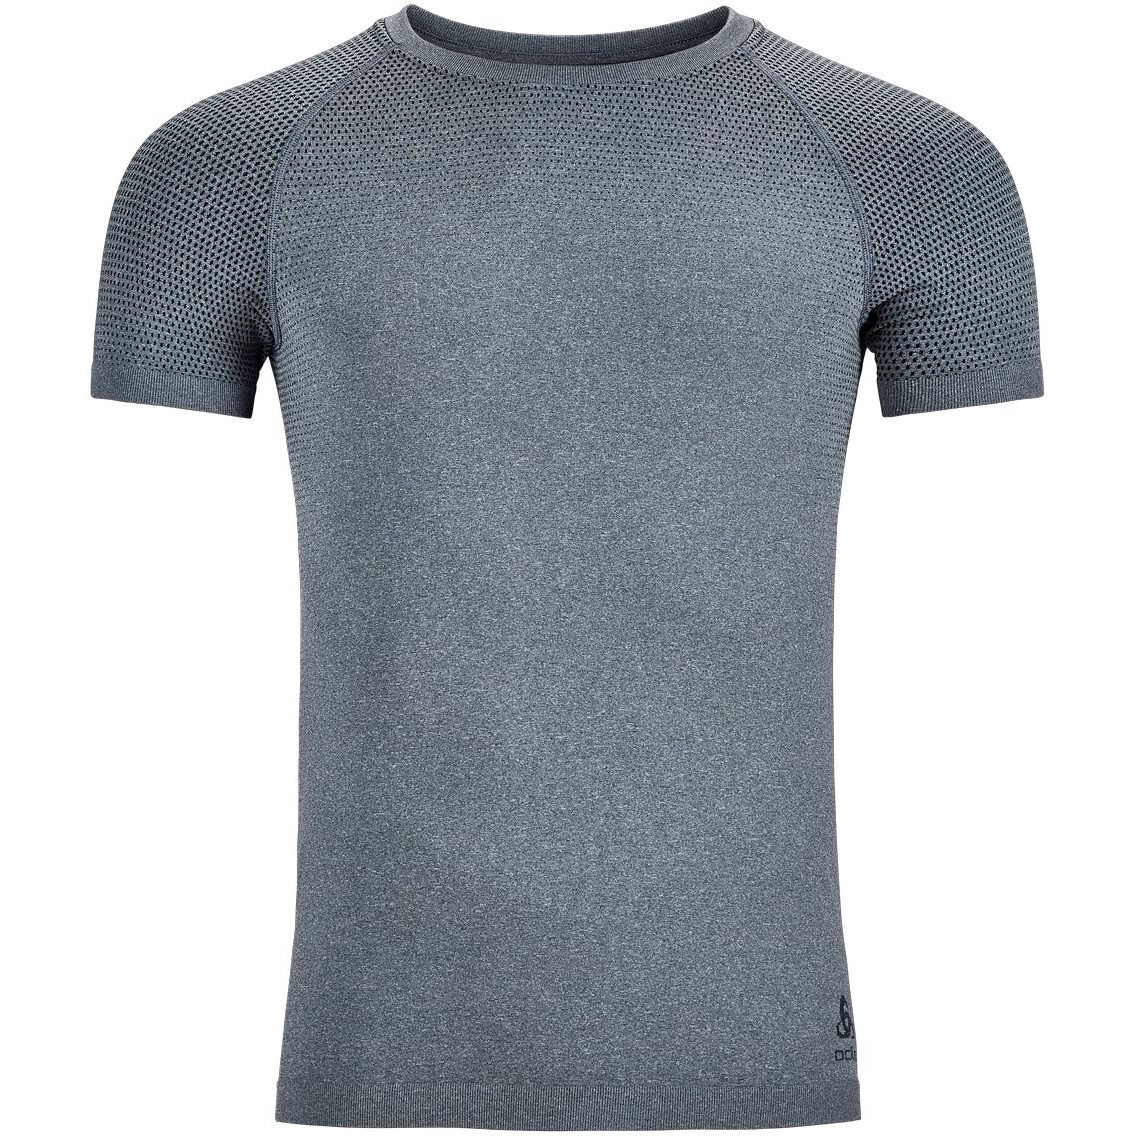 Produktbild von Odlo Performance Light Kurzarm-Unterhemd Herren - grey melange